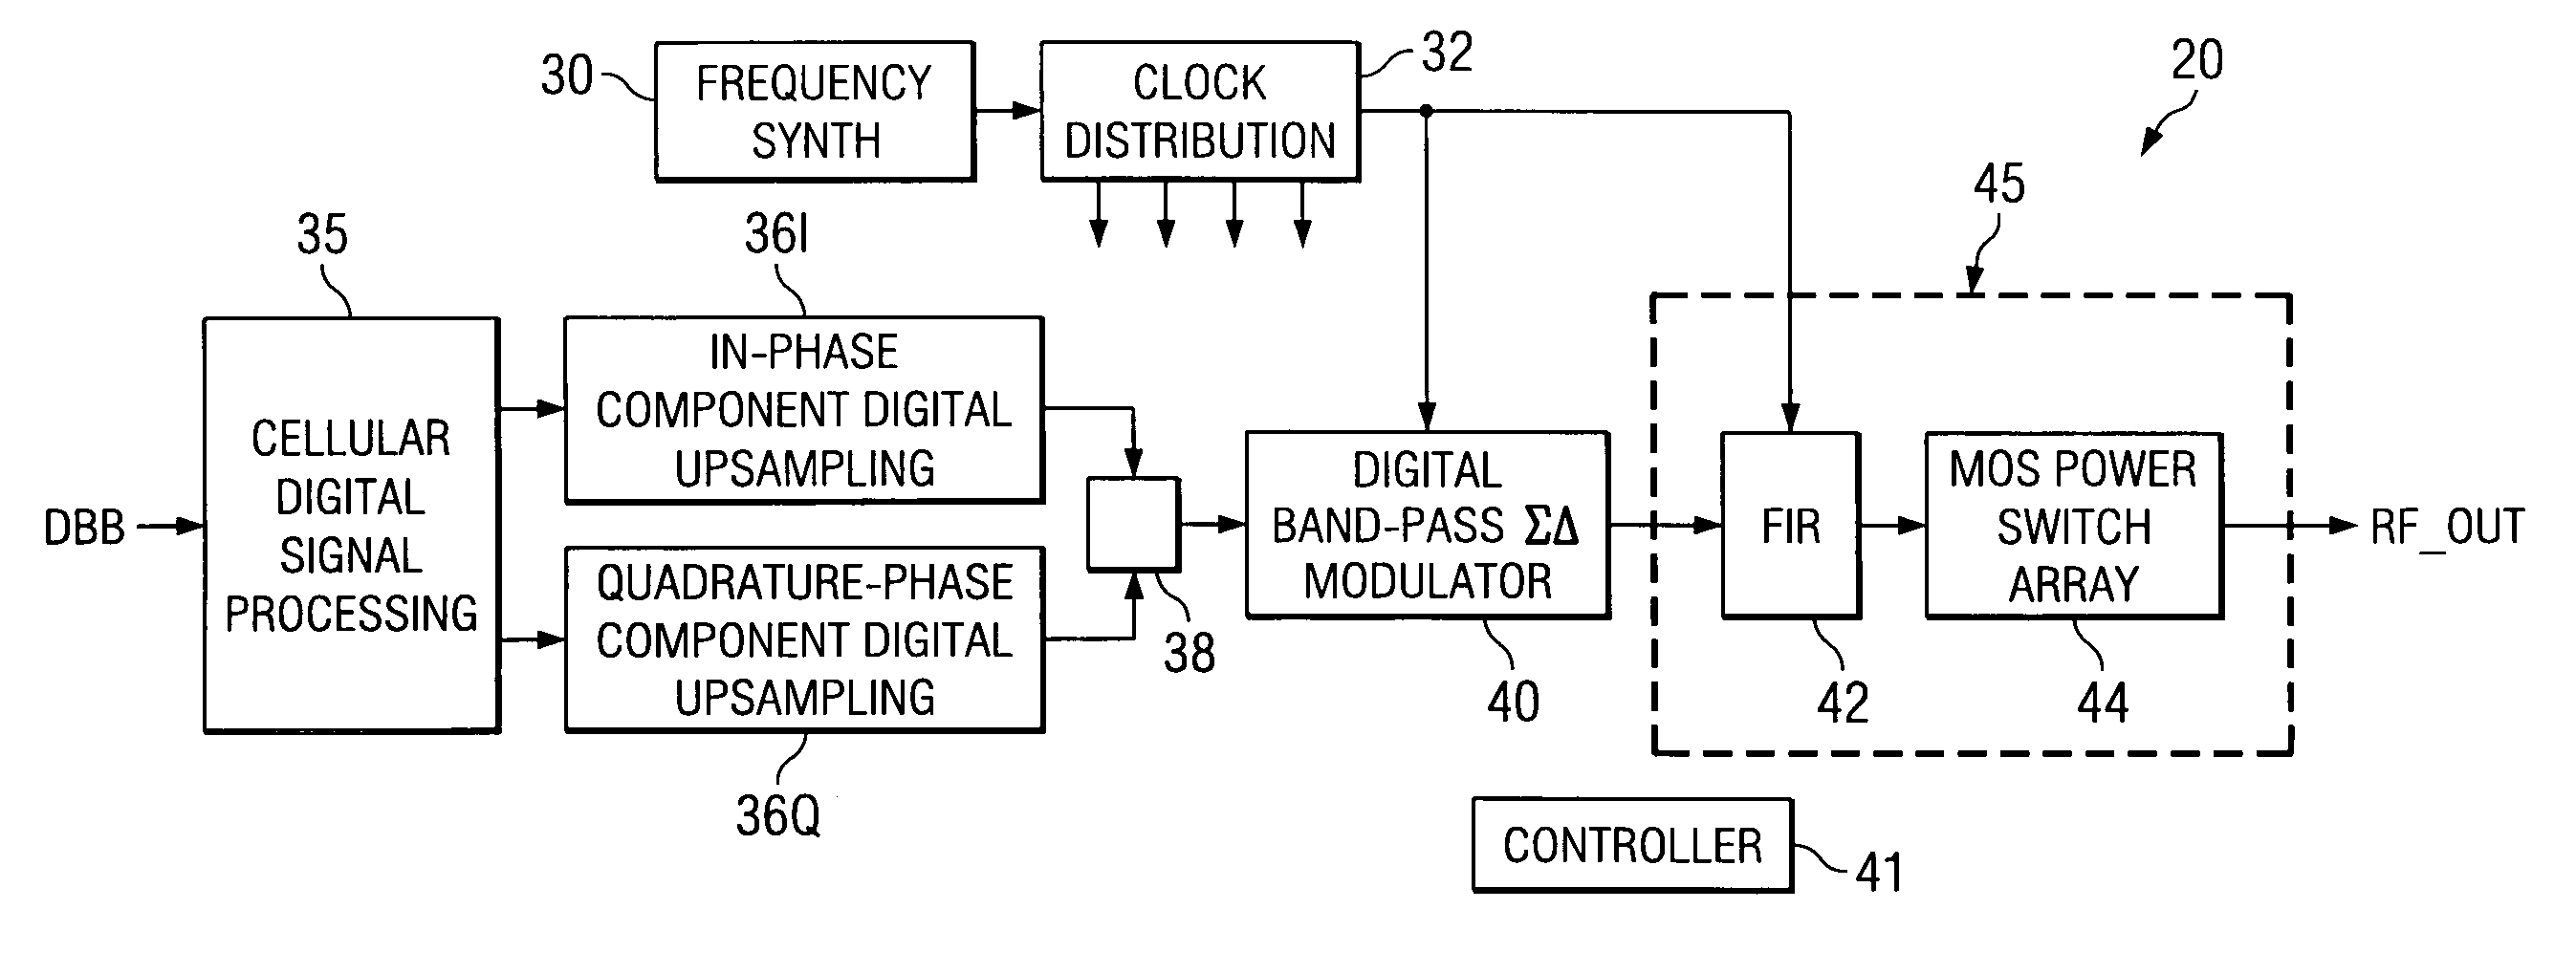 Fully digital transmitter including a digital band-pass sigma-delta modulator